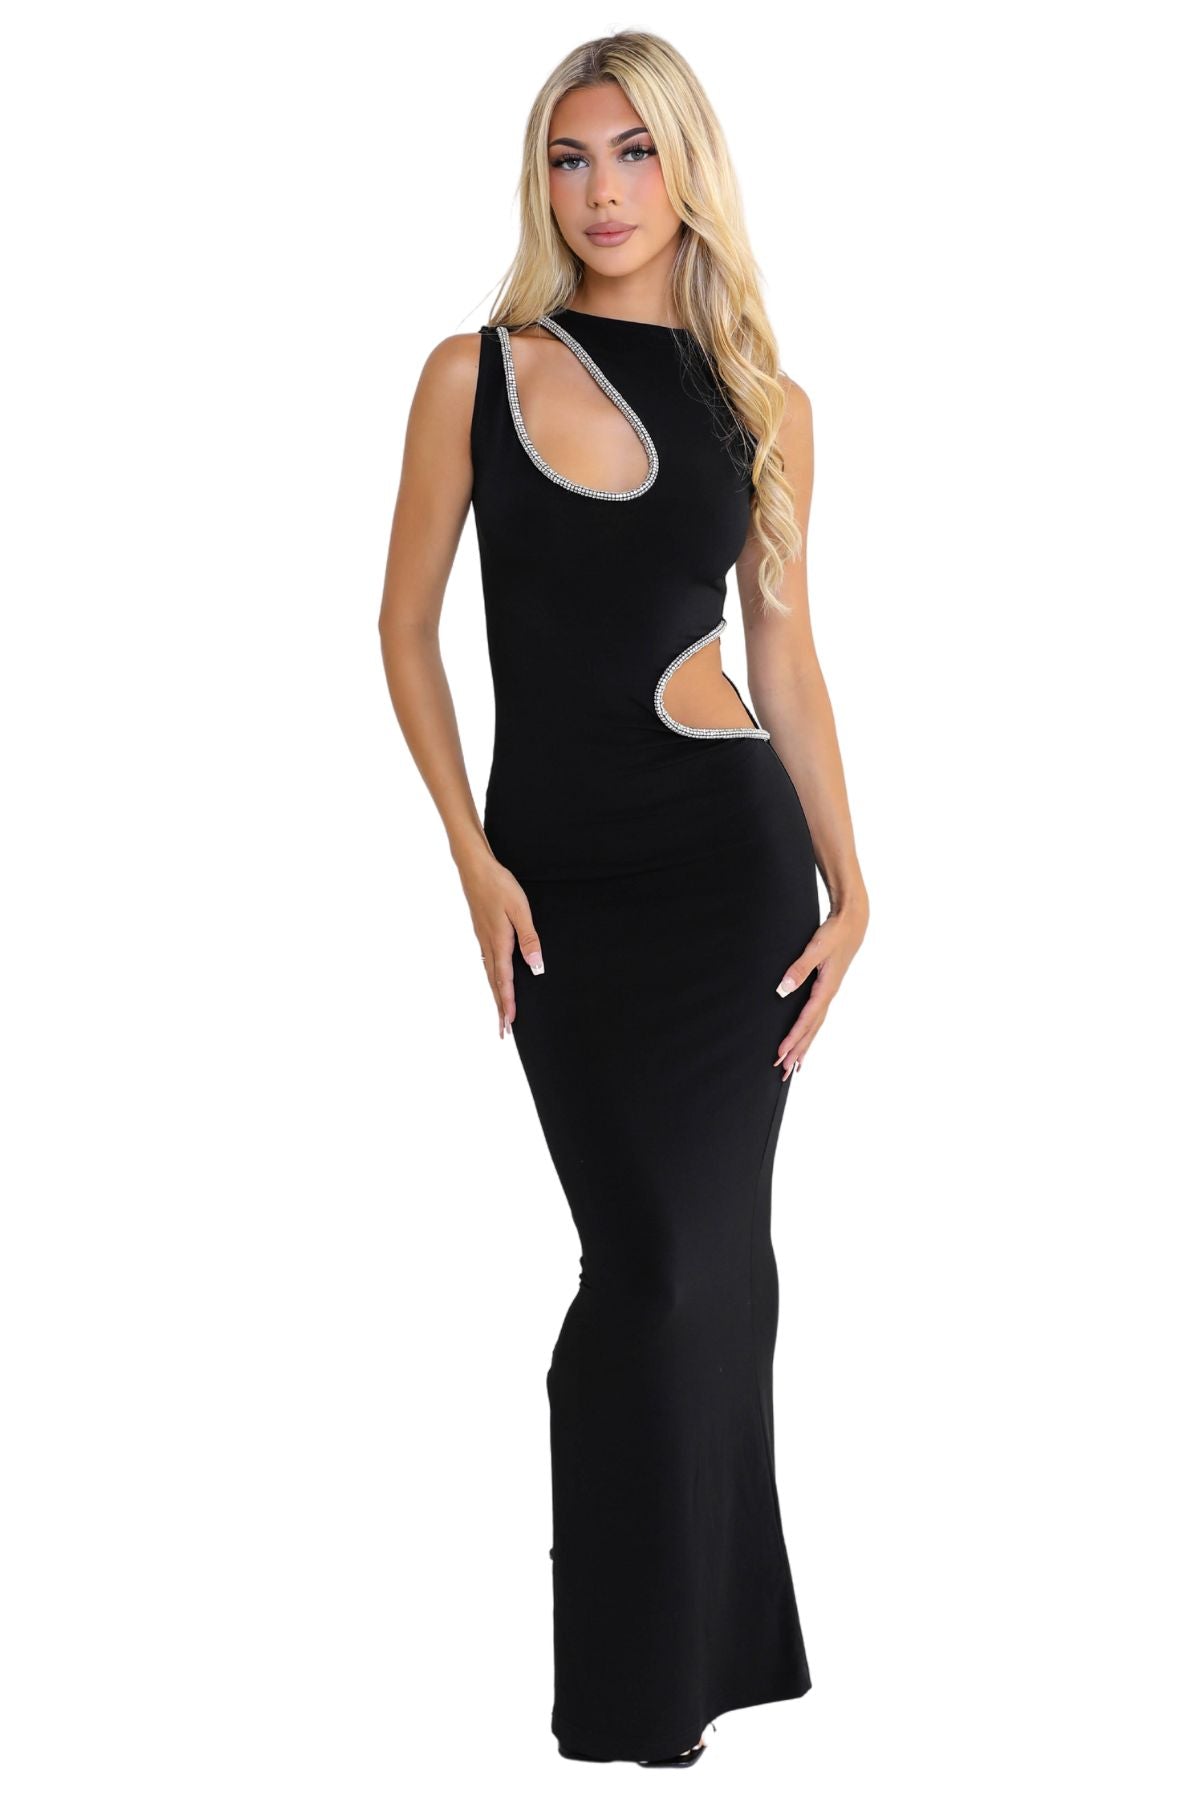 Ivona Skelo IVONA SKELO Vivia Dress (Black)- RRP $389 - USETHISFORWEBSITEPRODUCT_17_43f78eb0-3f50-4f10-b912-62f419831e3c.jpg